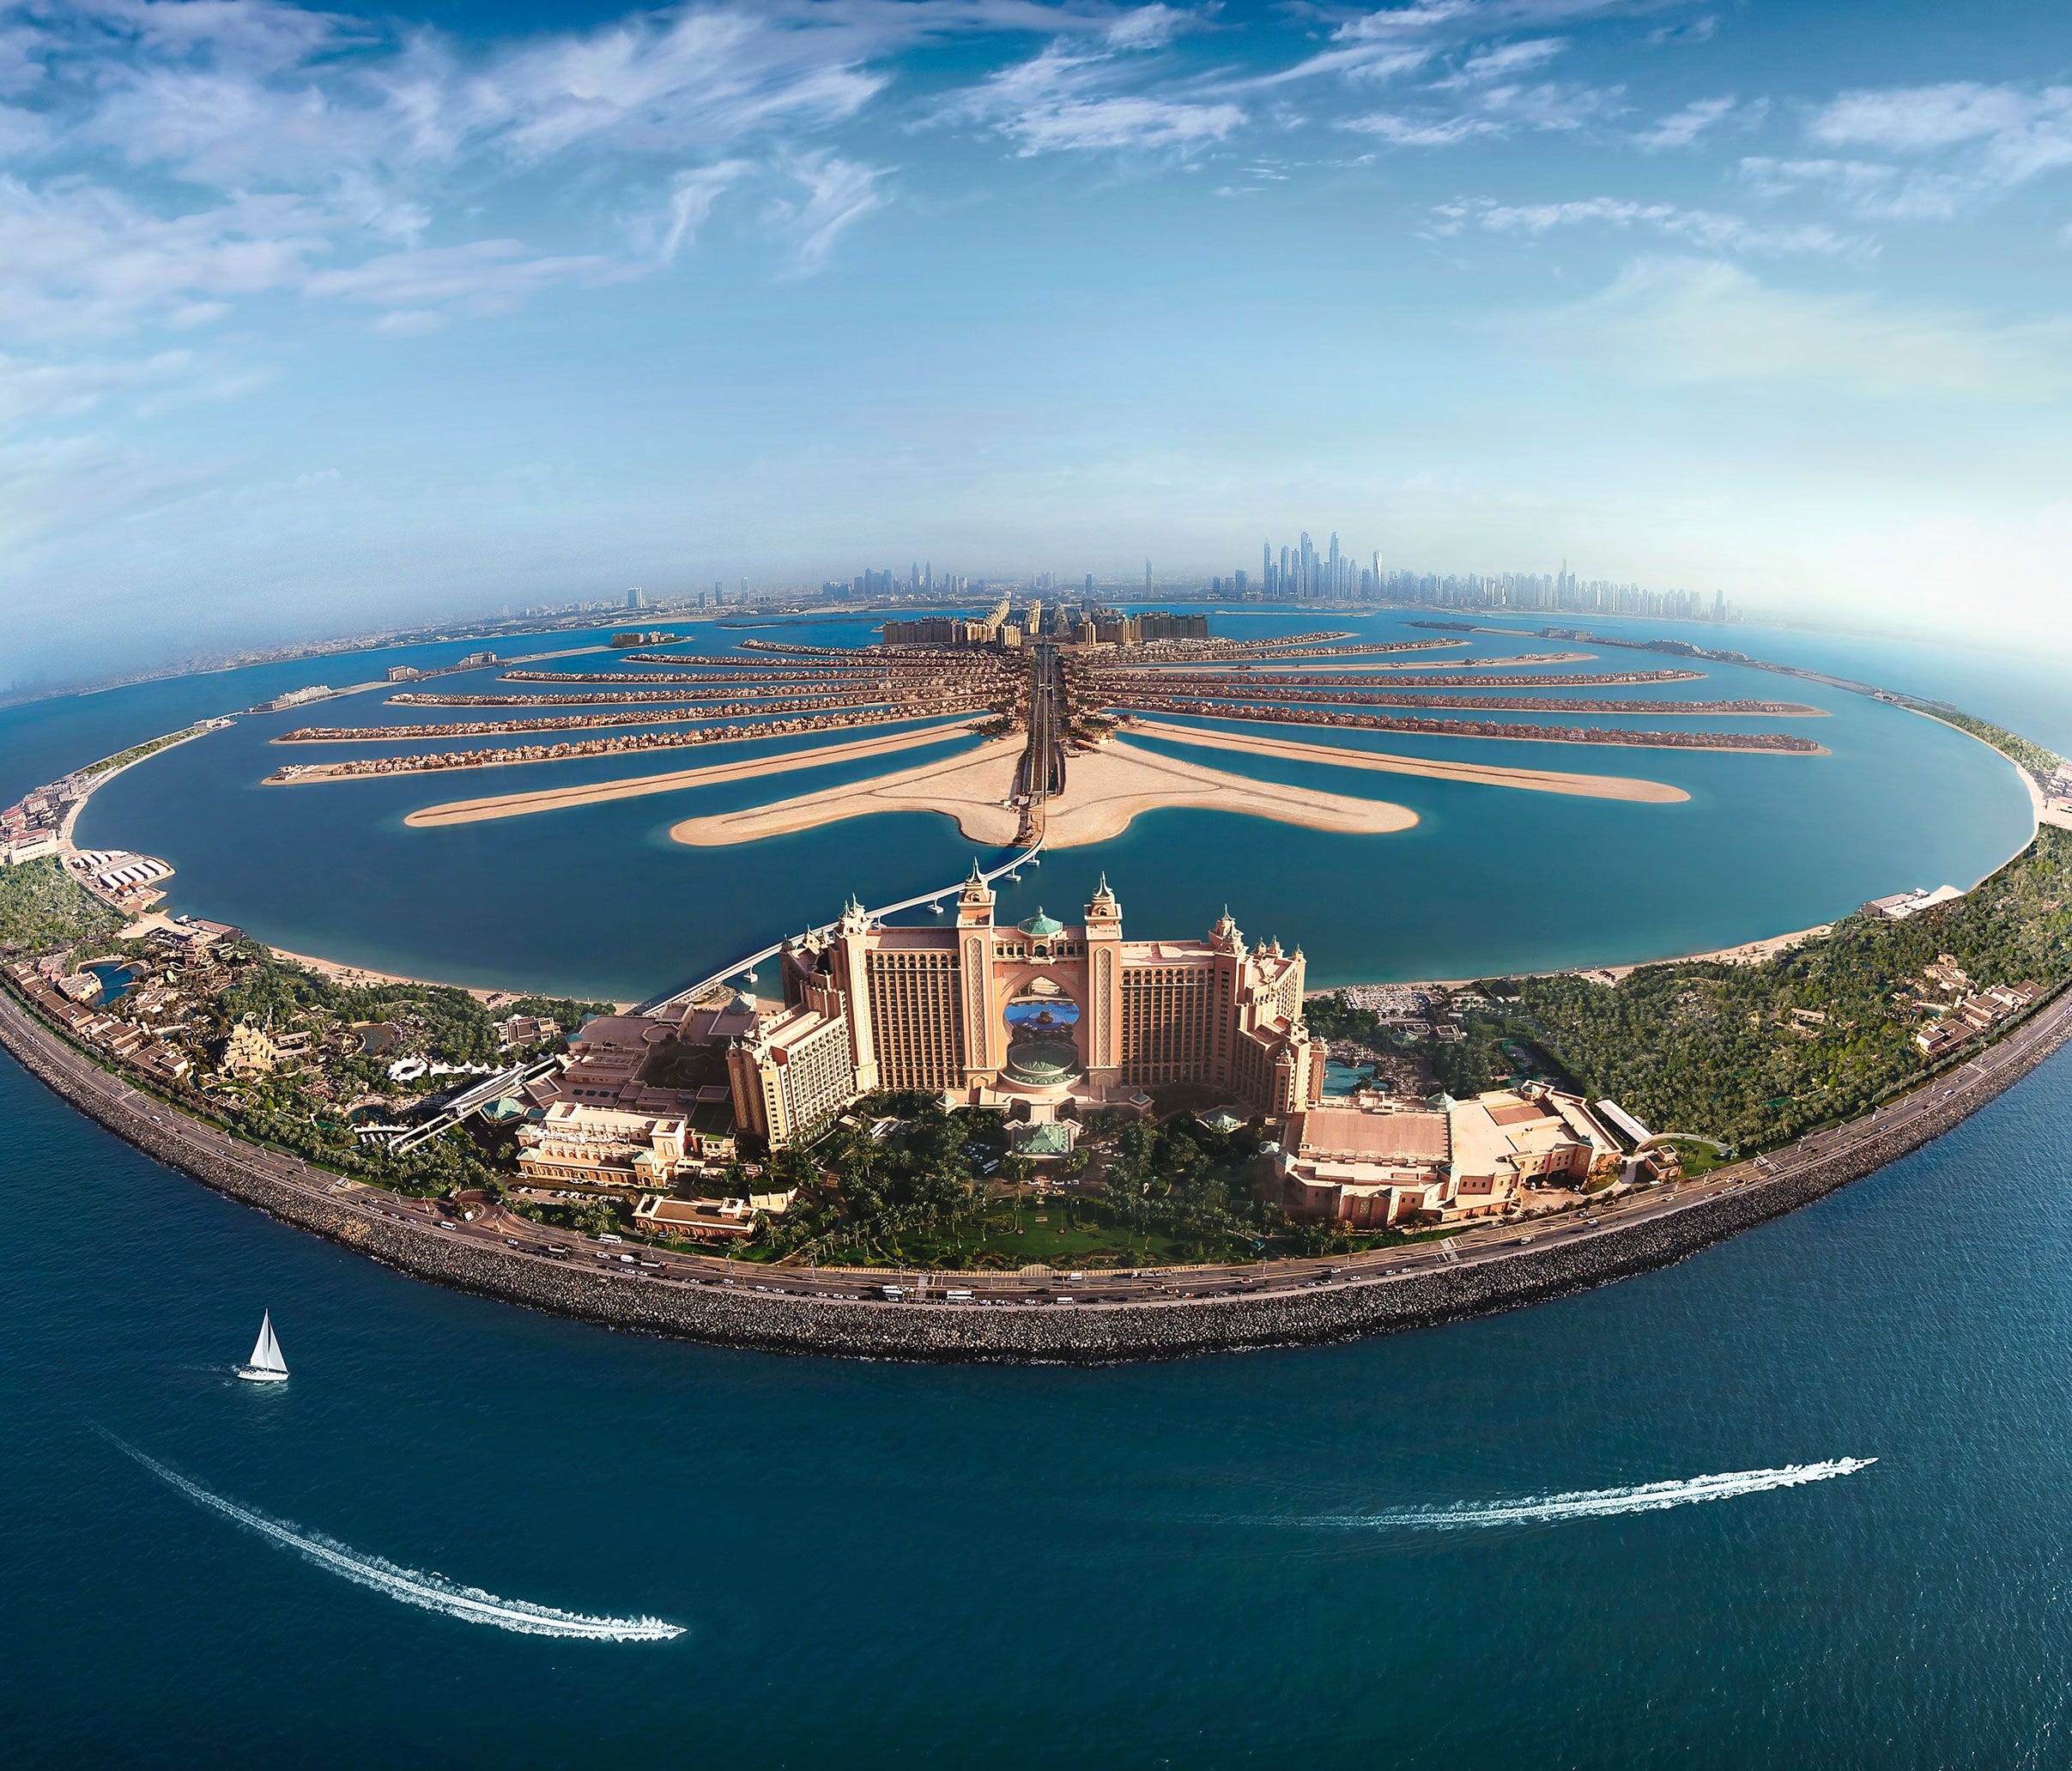 No. 17 hotel: Atlantis, The Palm, Dubai. Number of reviews: 15,455. TripAdvisor Bubble Rating: 4.5. For more information: https://www.tripadvisor.com/Hotel_Review-g295424-d1022759-Reviews-Atlantis_The_Palm-Dubai_Emirate_of_Dubai.html